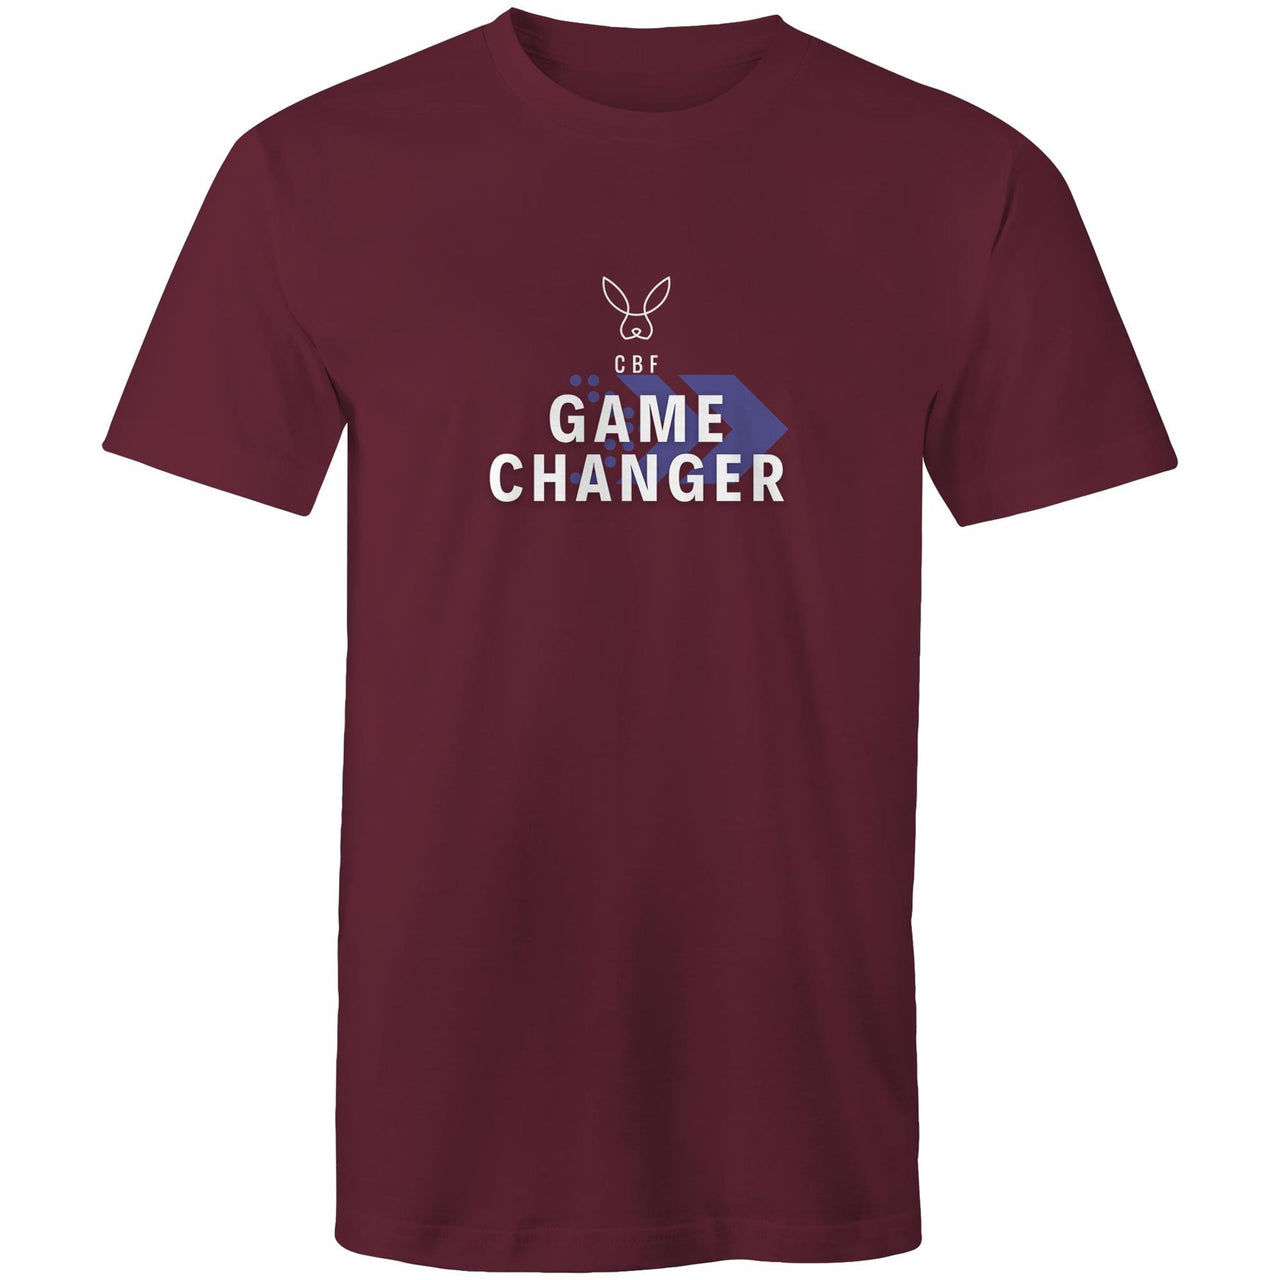 CBF Game Changer Unisex Mens Womens Crew T-Shirt burgundy by CBF Clothing